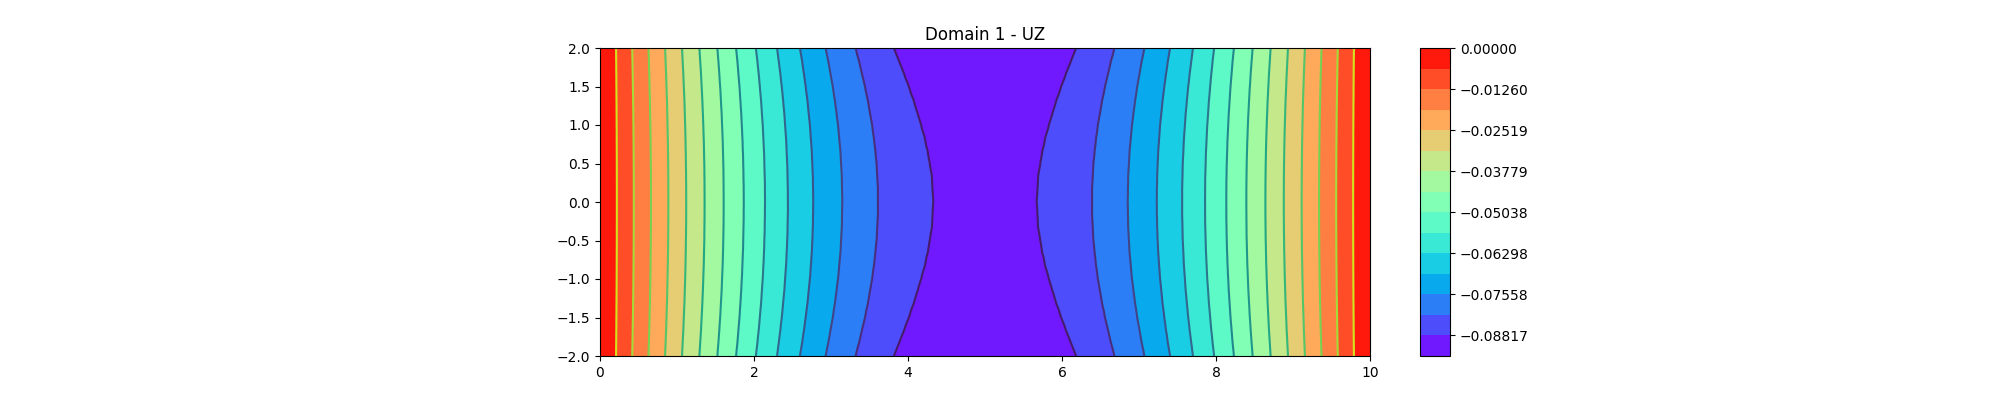 Domain 1 - UZ